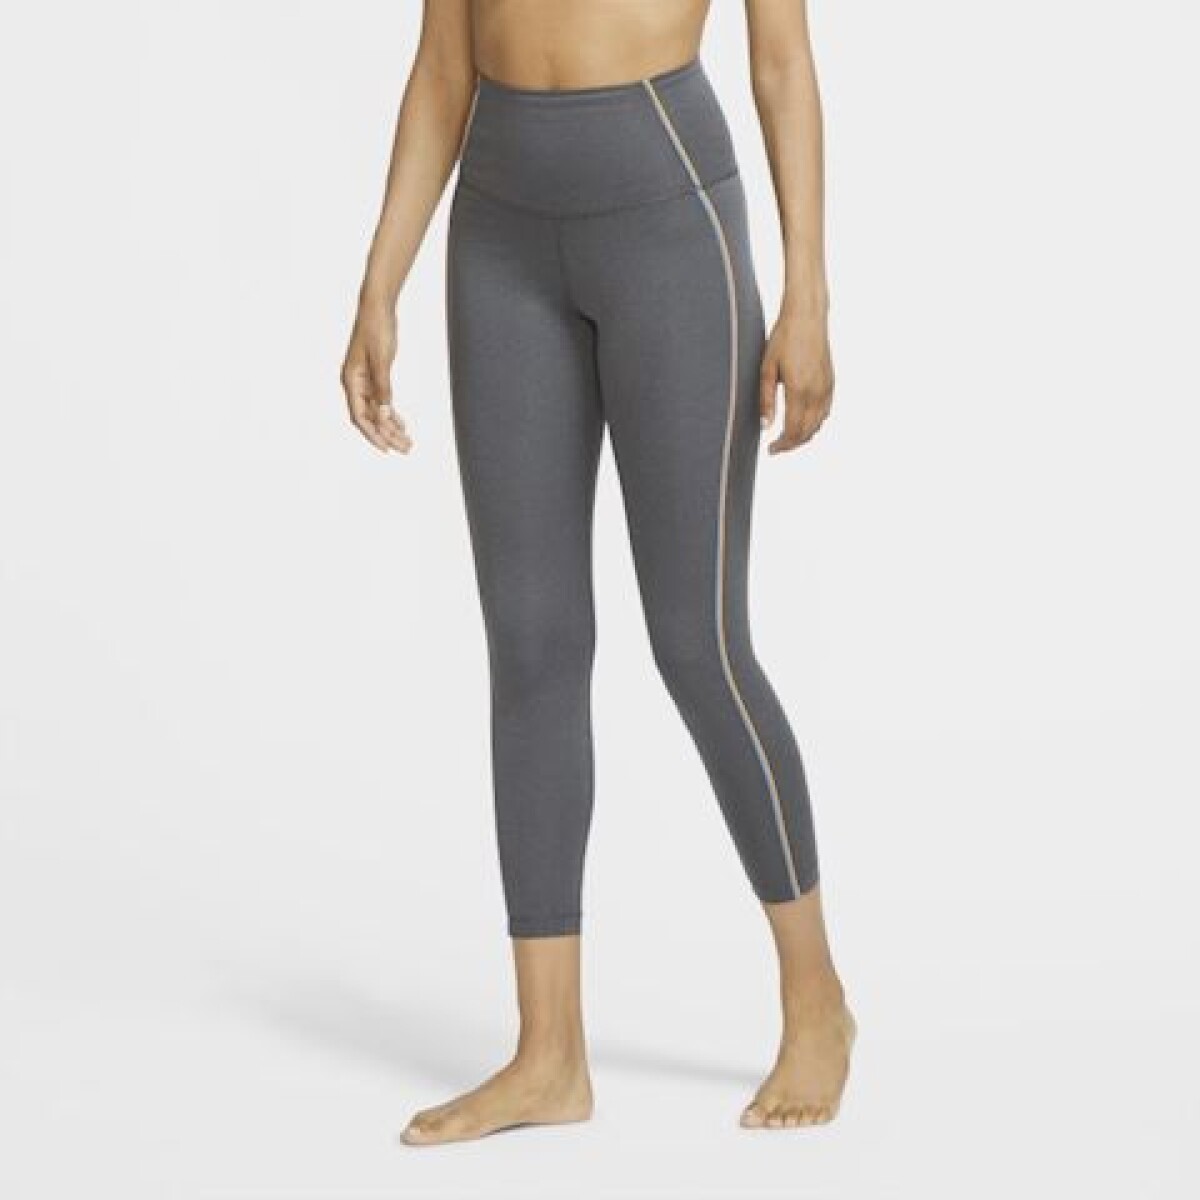 Calza Nike dama Yoga 7/8 VINYASA - Color Único 